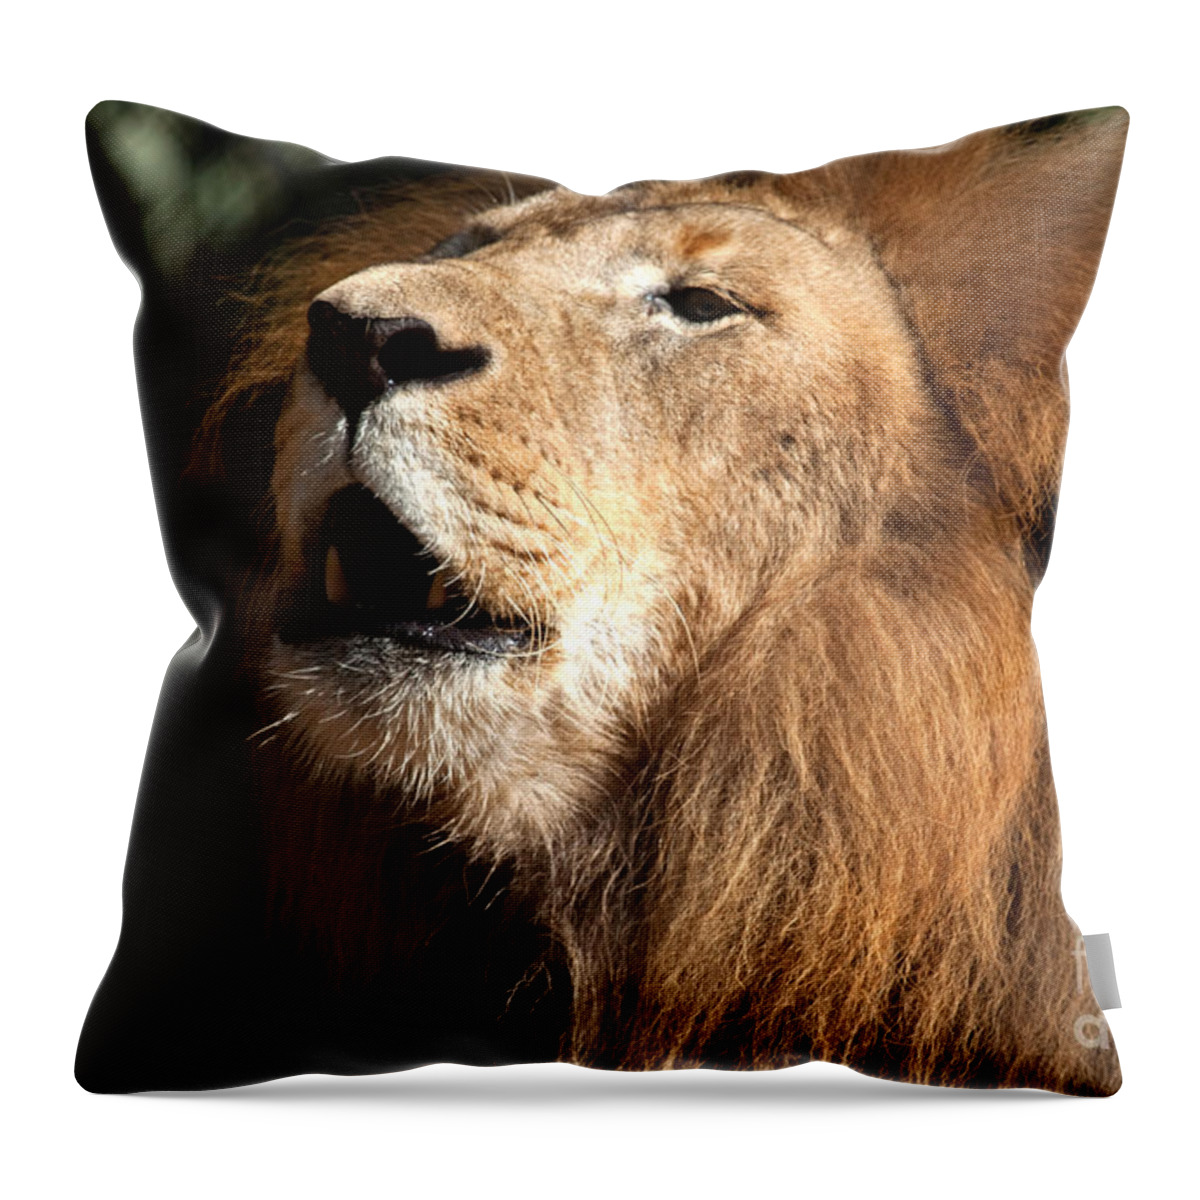 Lion Throw Pillow featuring the photograph Roar - African Lion by Meg Rousher